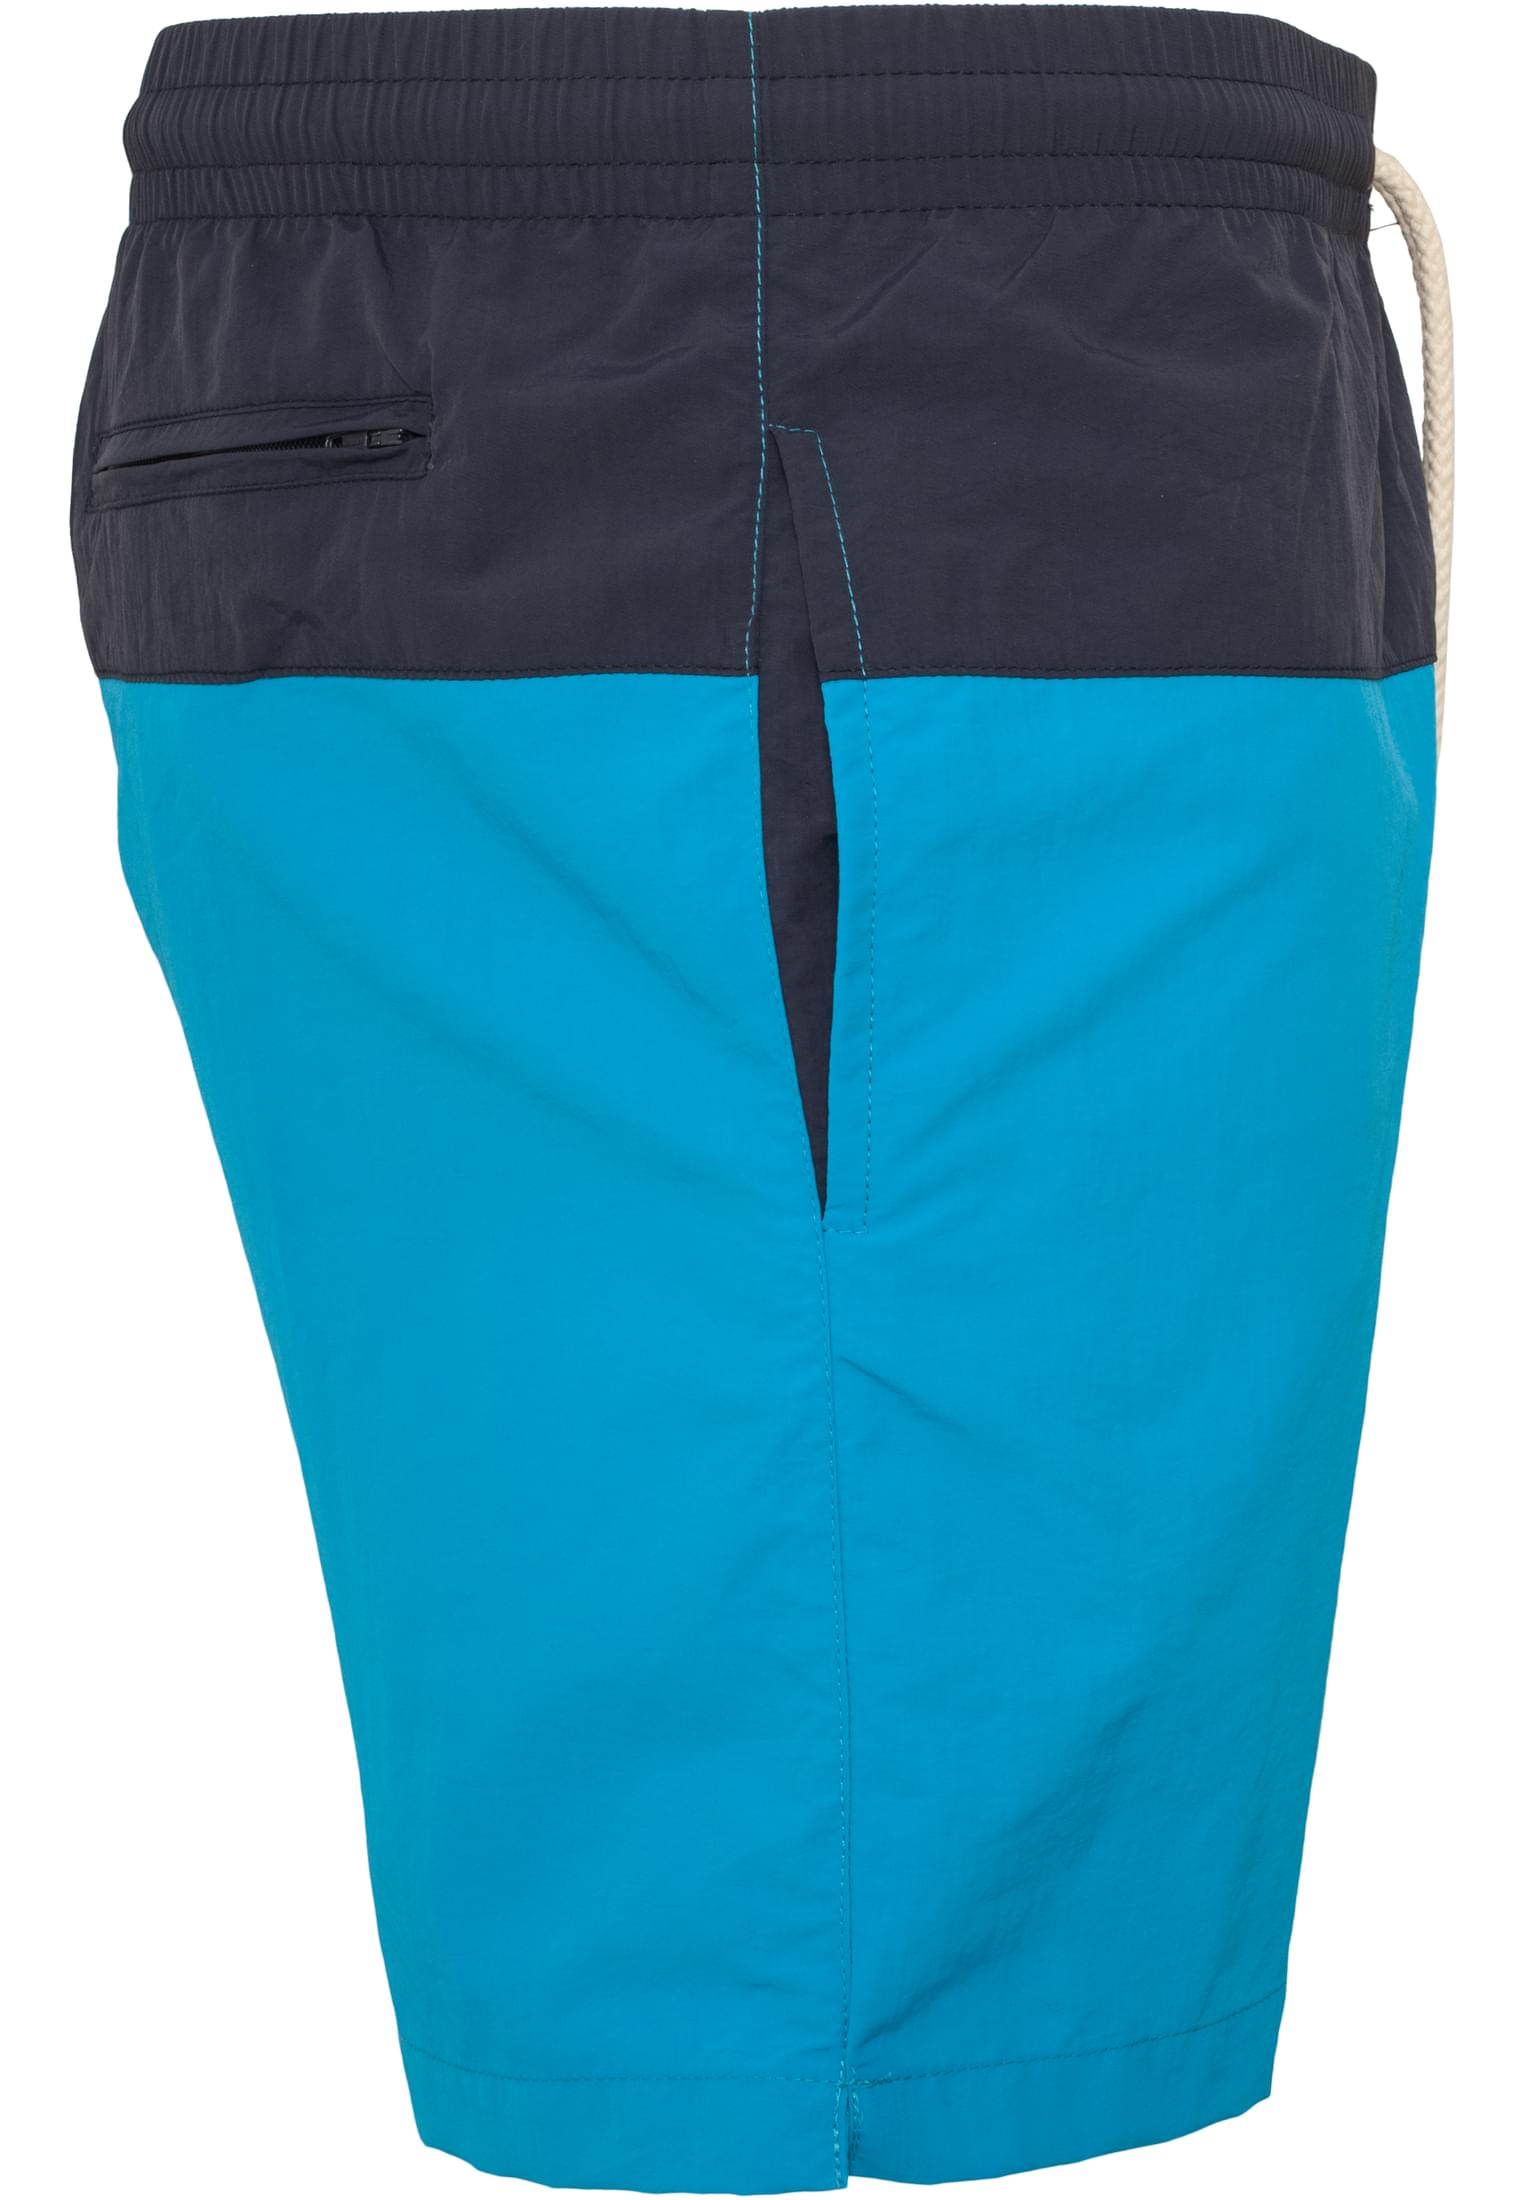 Plus Size Block Swim Shorts in Farbe nvy/tur